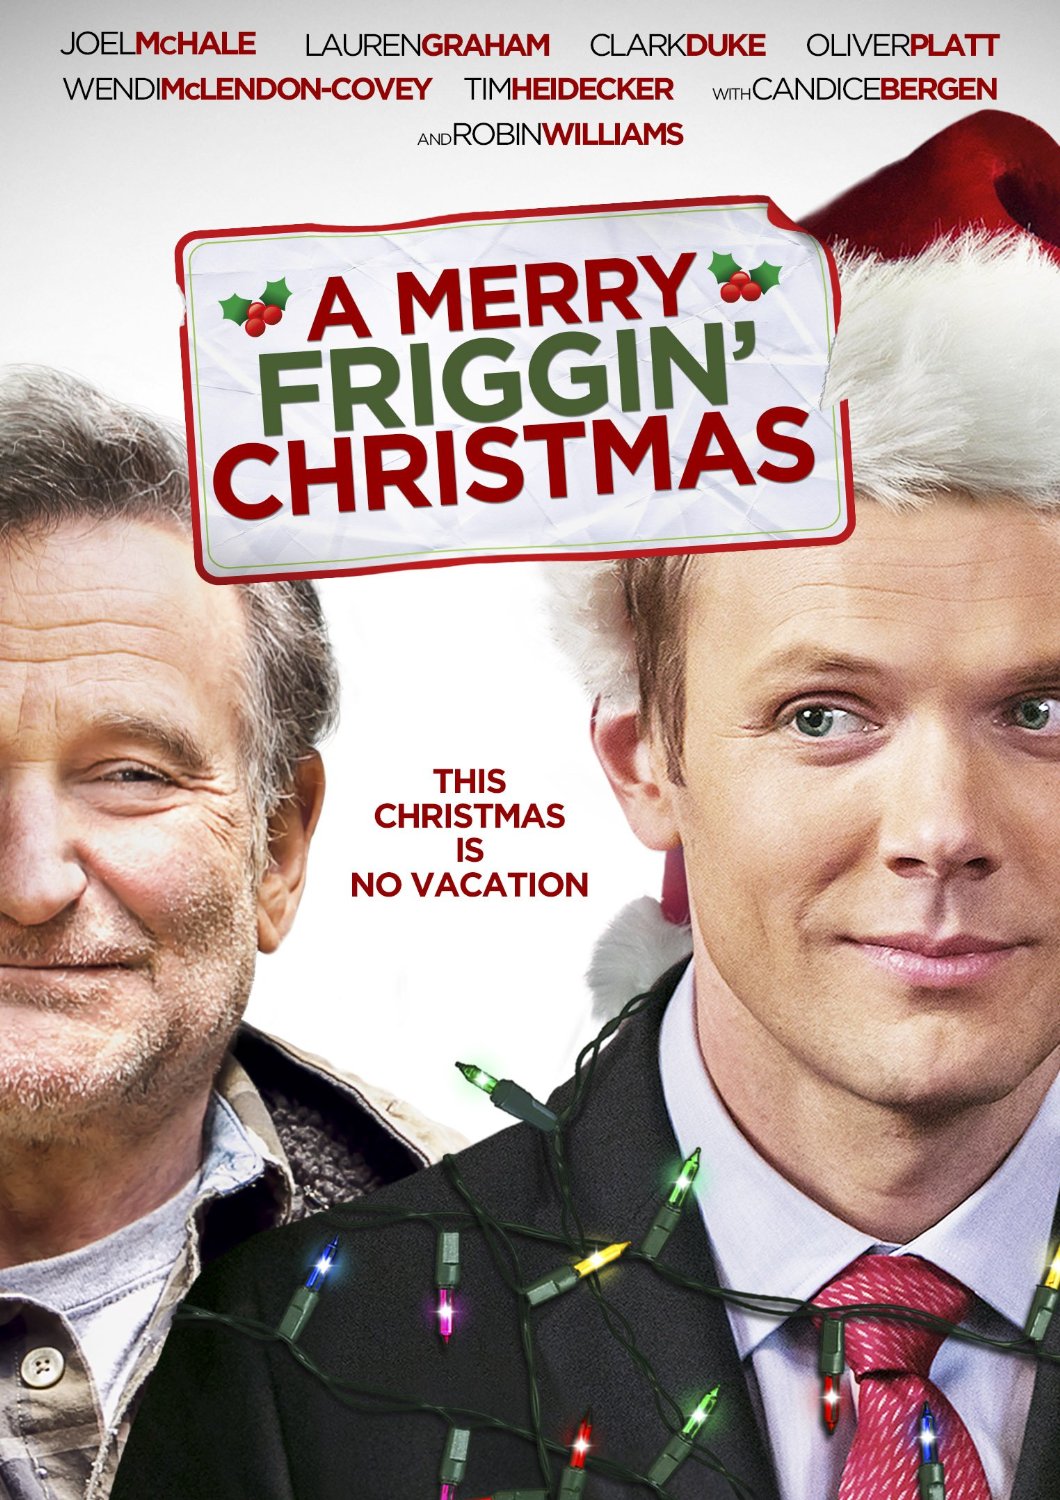 A Merry Friggin’ Christmas (2014) – Robin Williams, Joel McHale XMAS MOVIE REVIEW